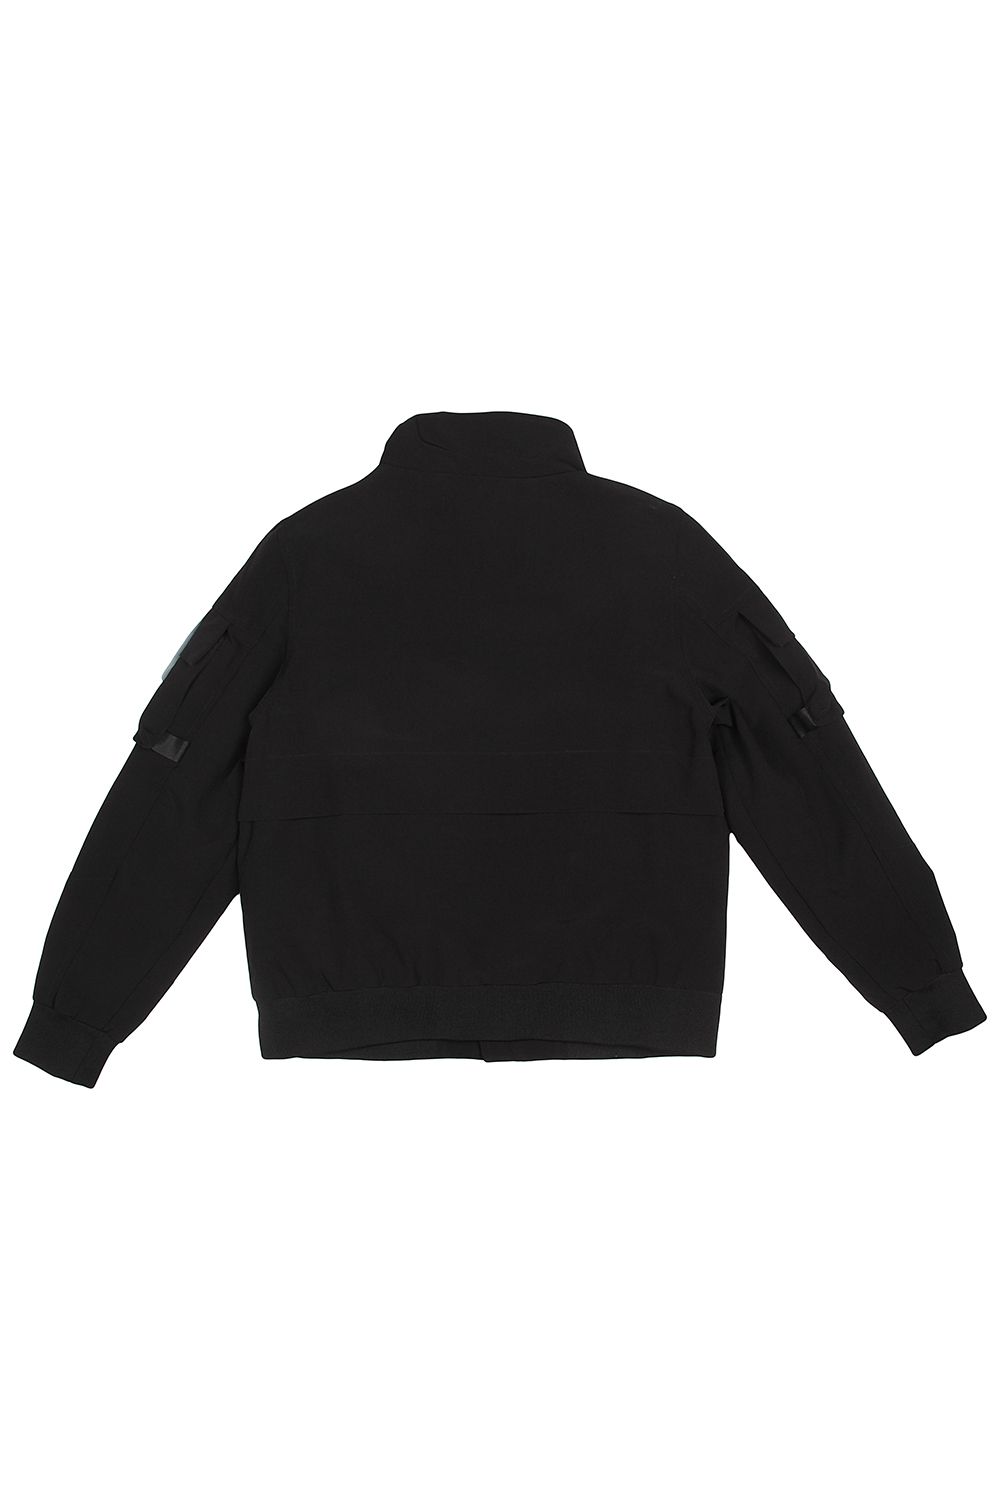 Куртка Noble People, размер 122, цвет черный 18607-520 - фото 3